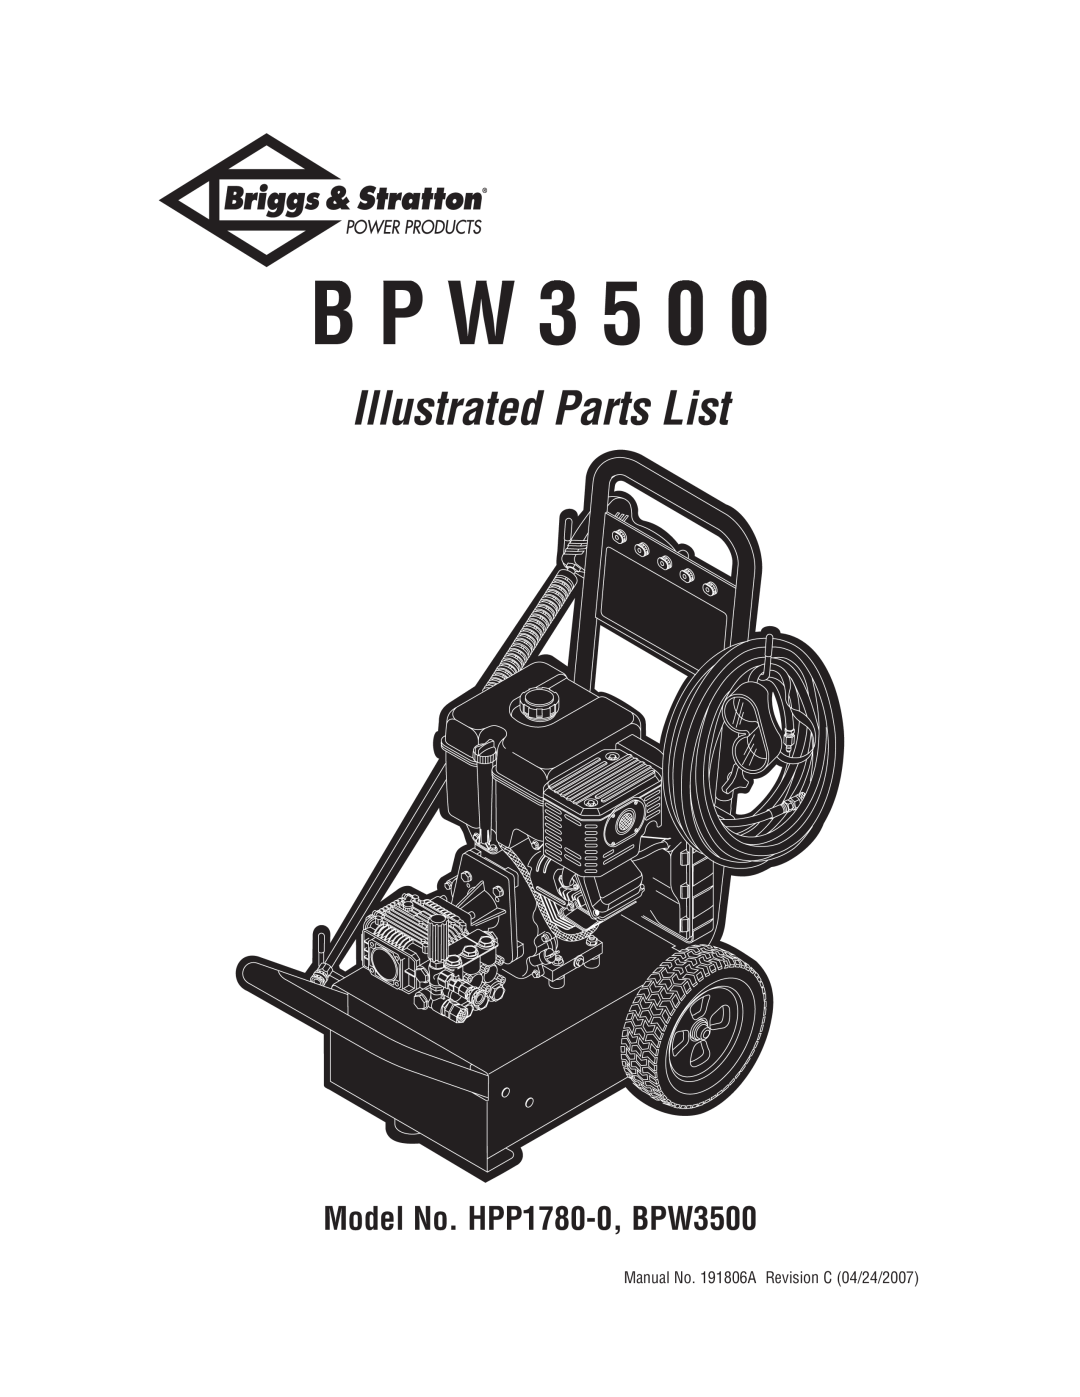 Briggs & Stratton manual B P W, Illustrated Parts List, Model No. HPP1780-0,BPW3500 